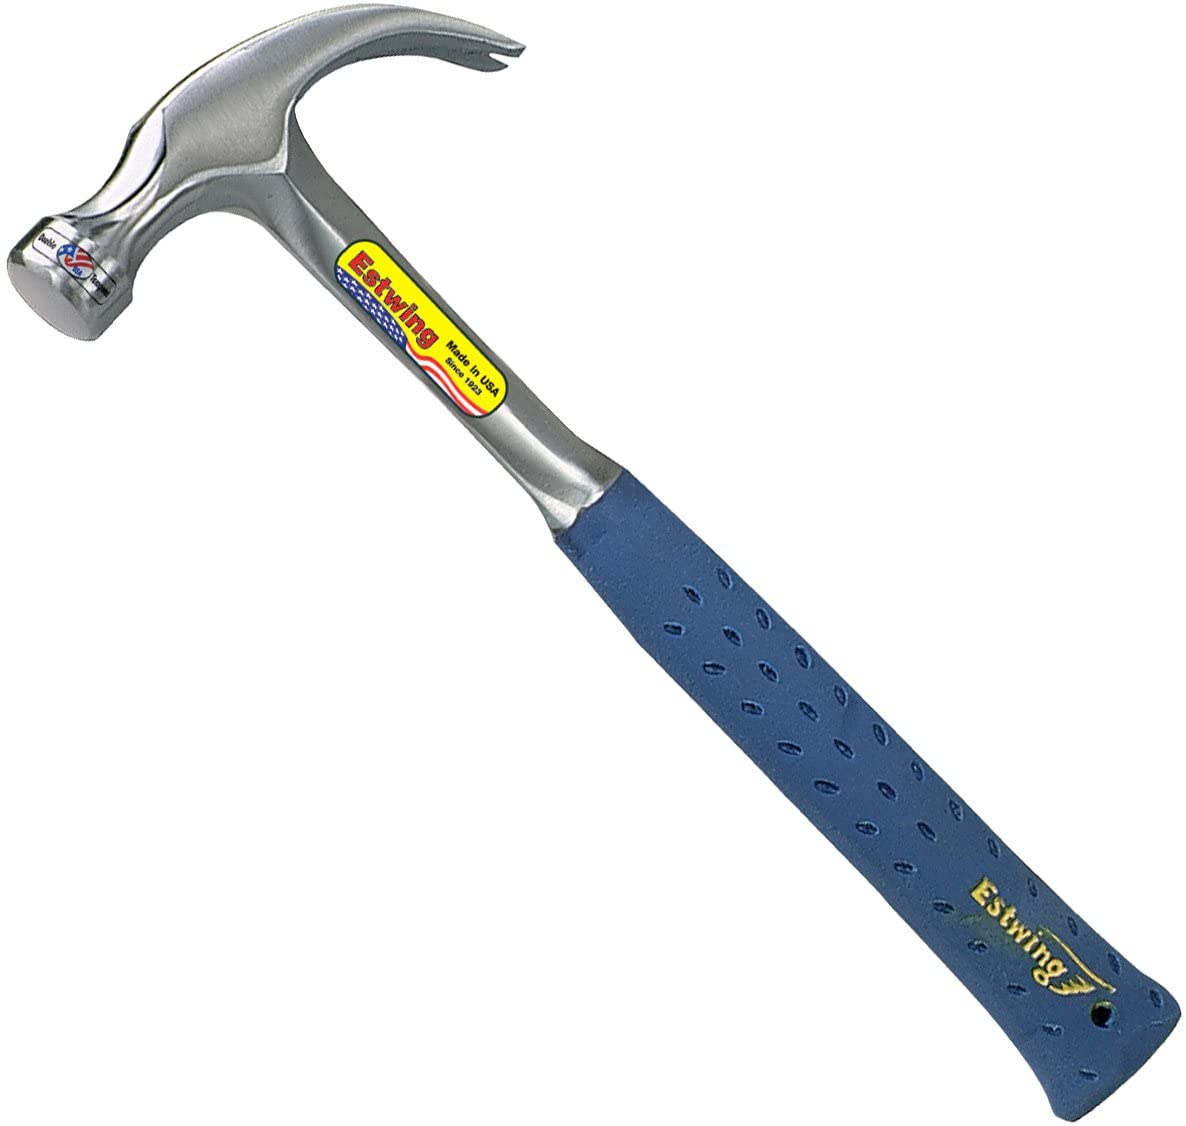 Estwing Hammer - Made in USA ค้อนผลิตในสหรัฐอเมริกา ทำจากเหล็กท่อนเดียว ด้ามจับลดแรงกระแทก Shock Absorber Grip & Smooth Face 16 oz Curved Claw ของแท้คุณภาพสูง Authentic High Quality